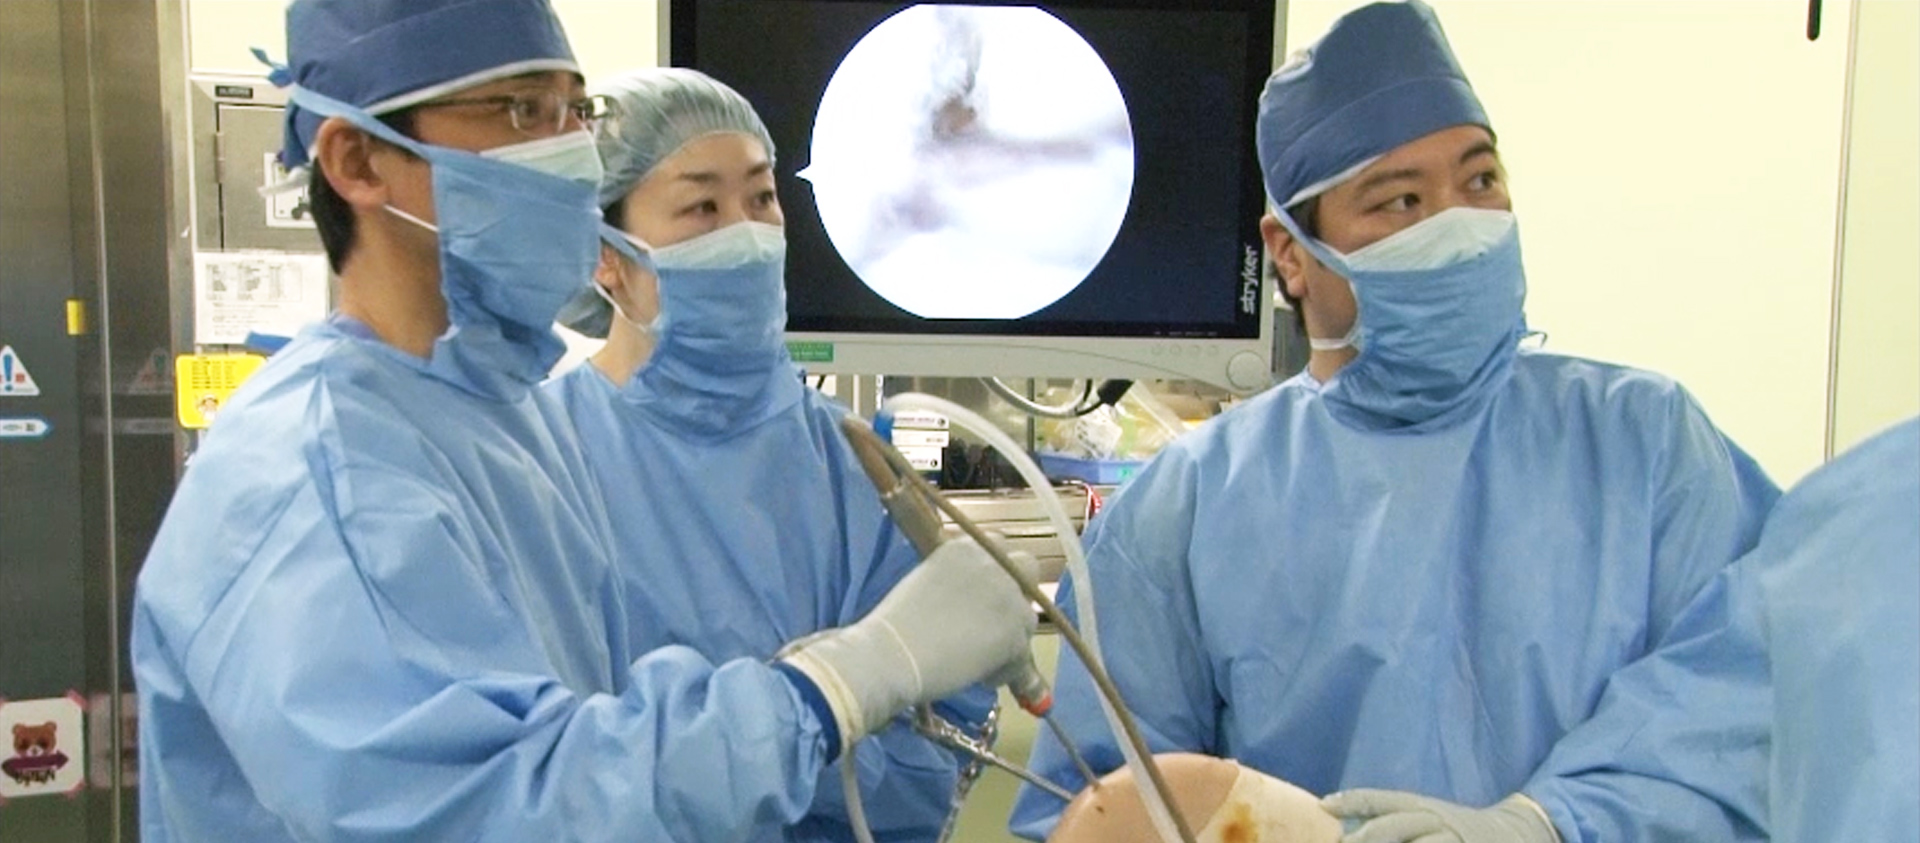 Department of Orthopaedic Surgery,Hirosaki University Graduate School of Medicine